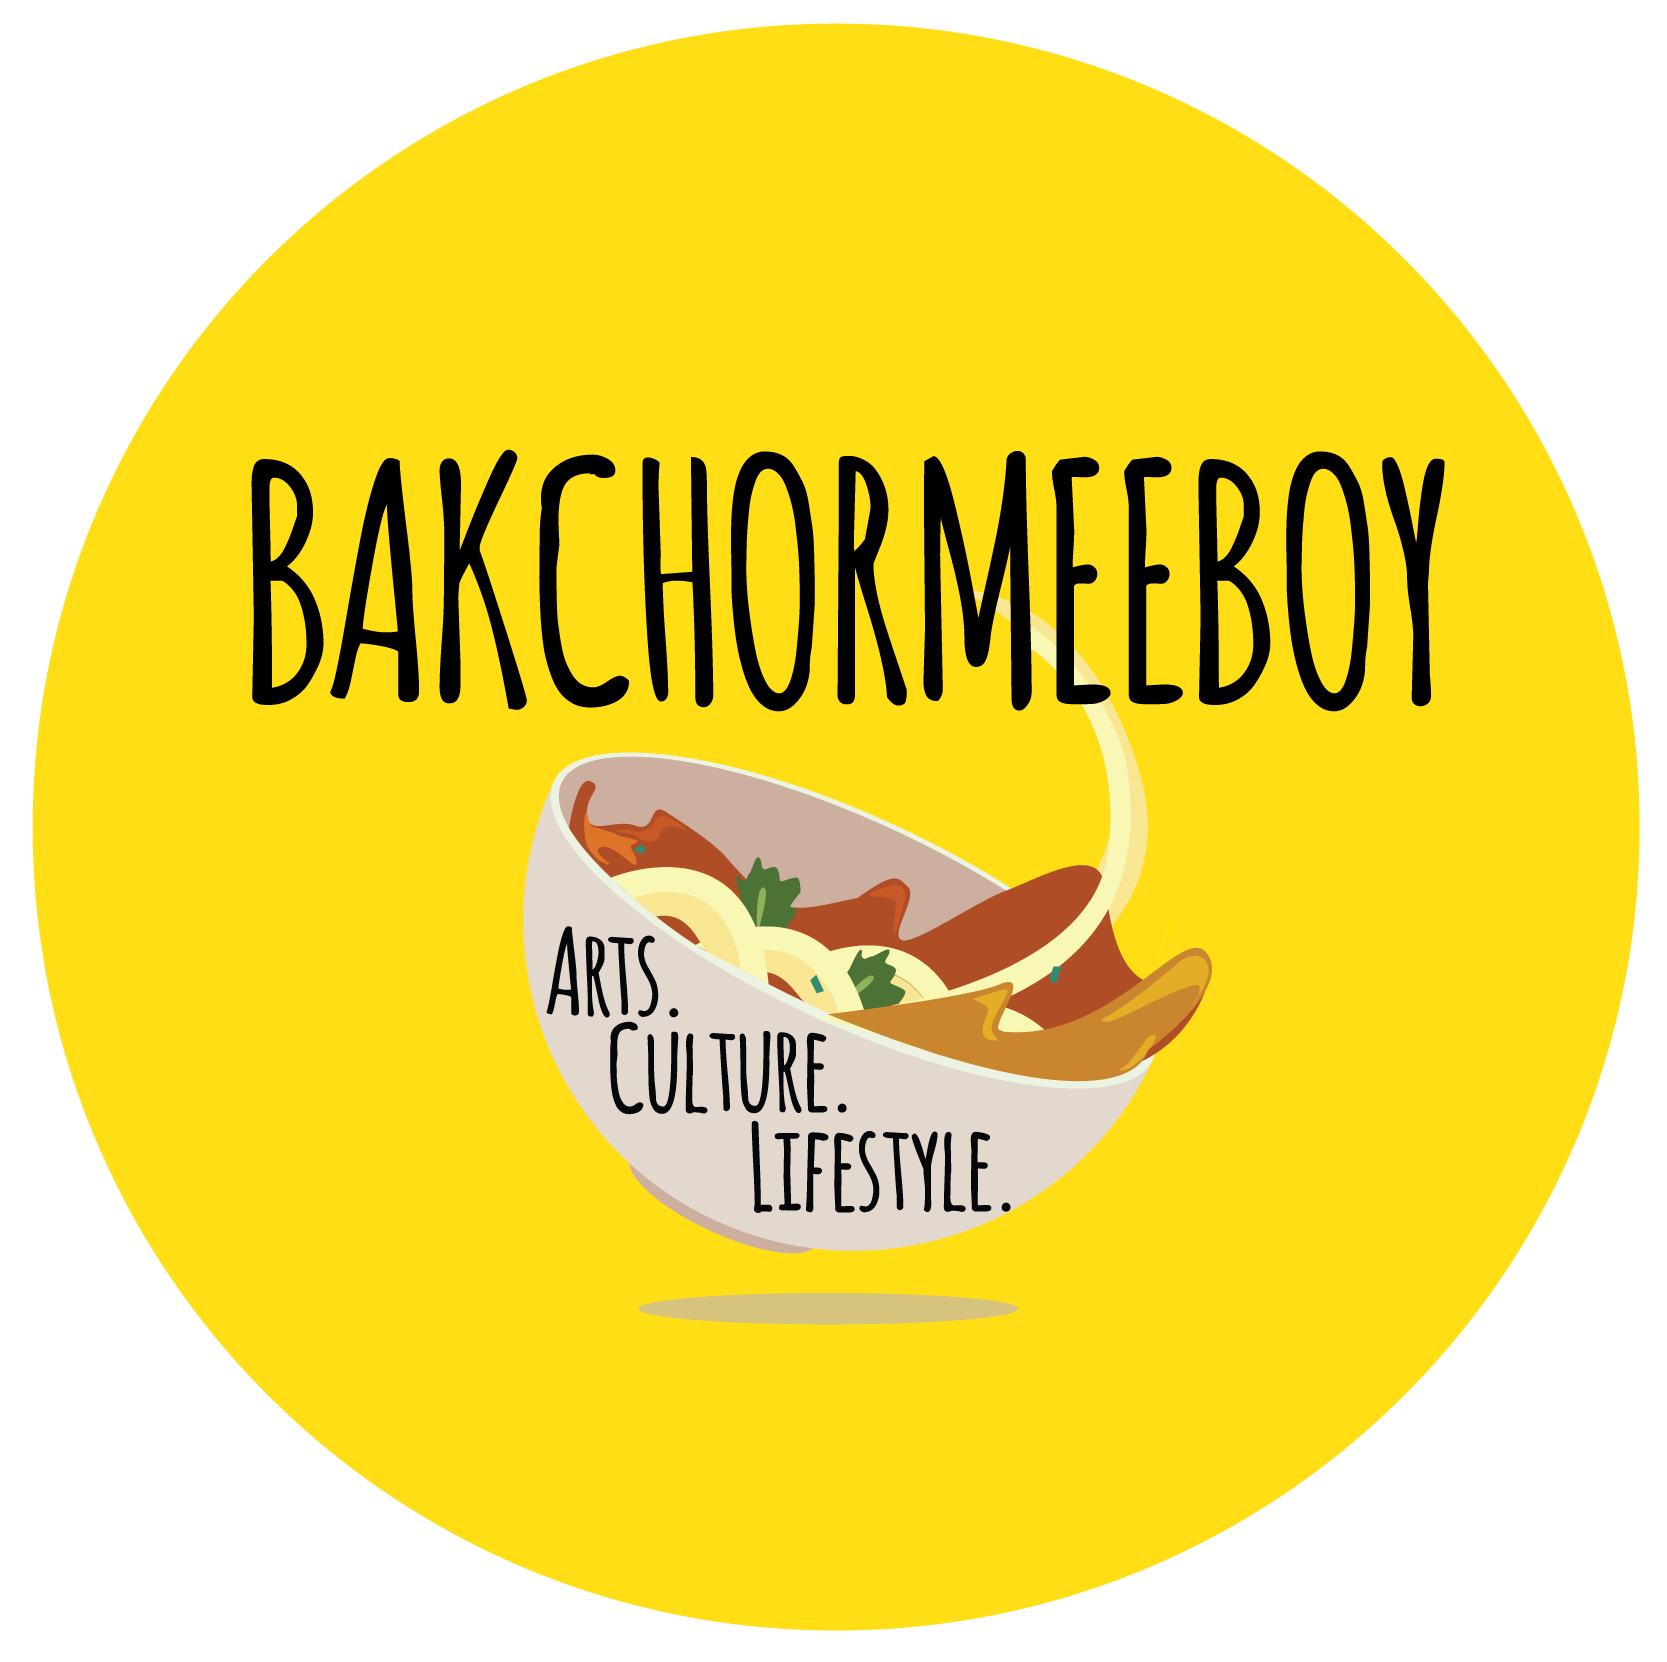 Bakchormeeboy